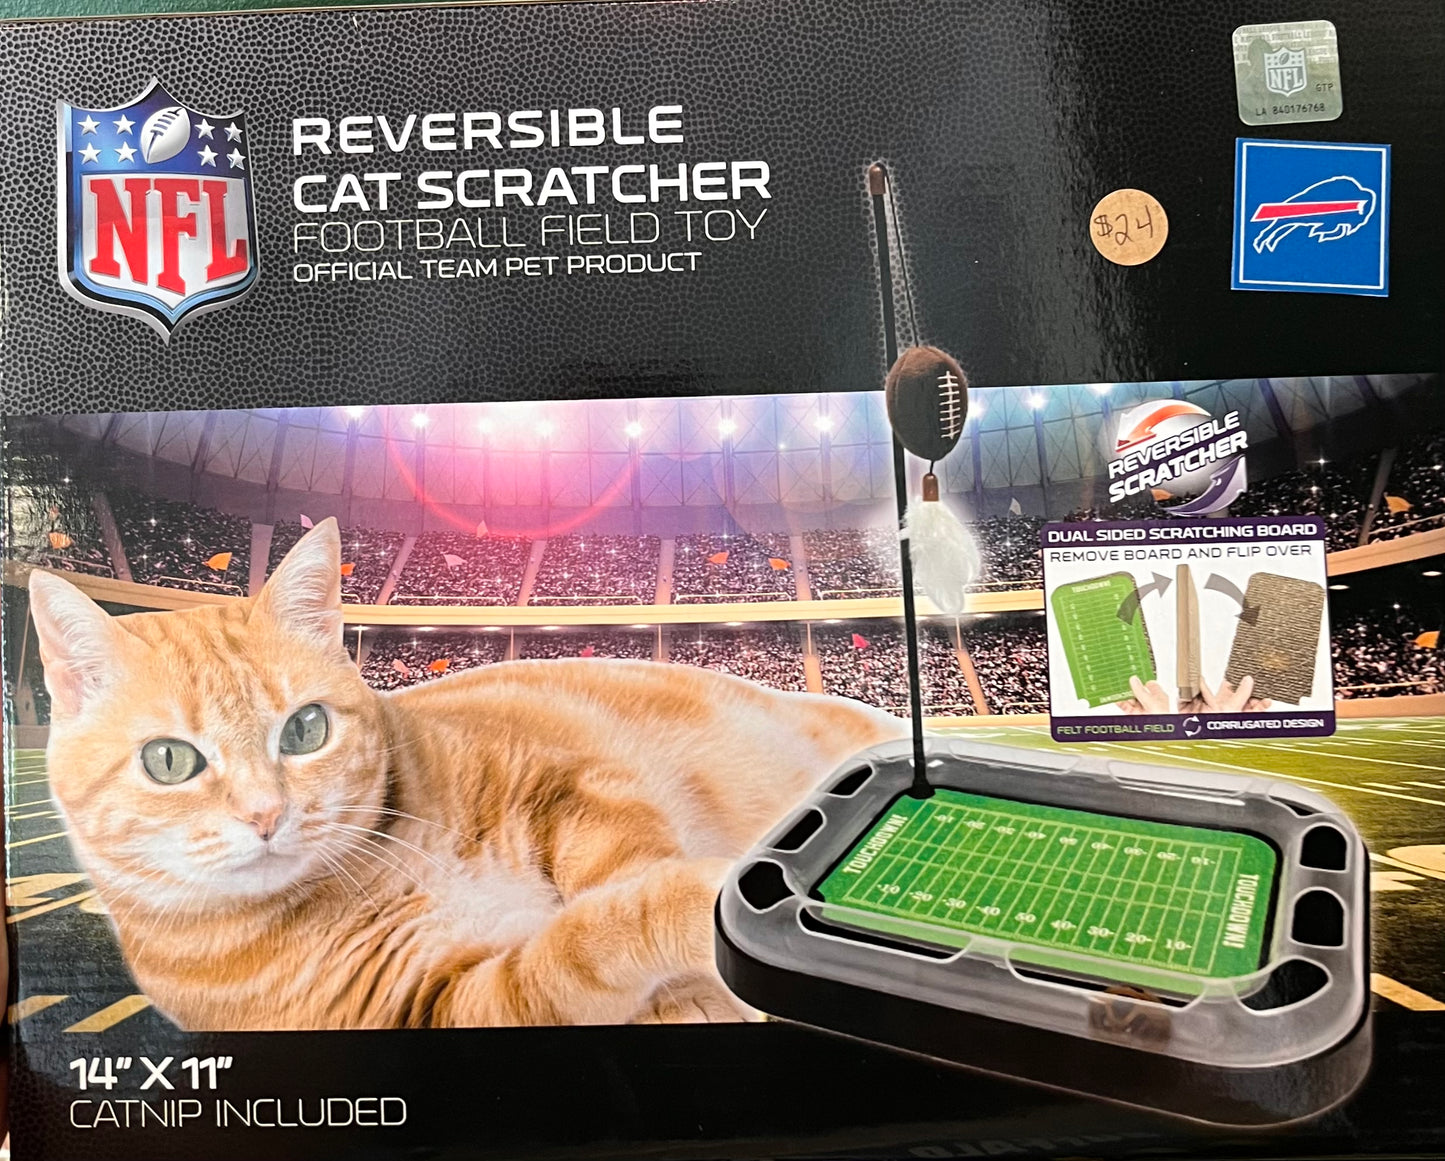 Reversible Cat Scratcher Football Field Toy